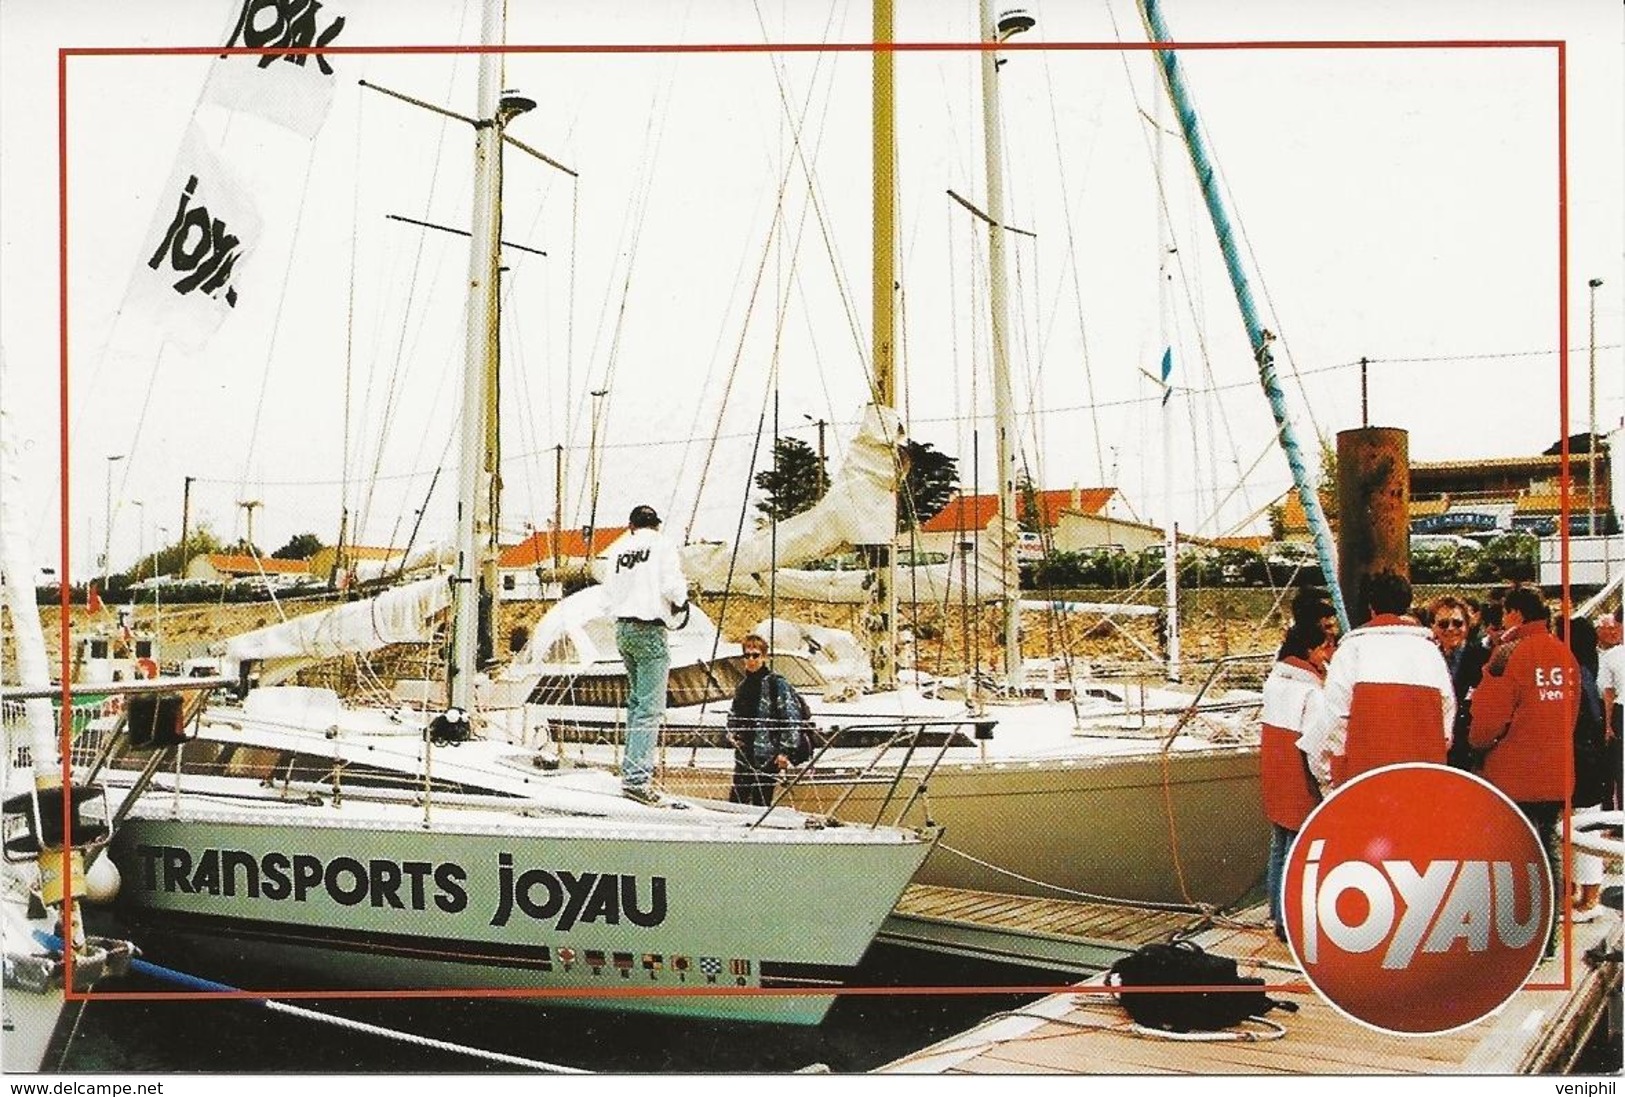 CARTE POSTALE -TRANSPORTS JOYAU - VENDEE GLOBE JUIN 1998 - TIRAGE 500 EXEMPLAIRES - Pubblicitari